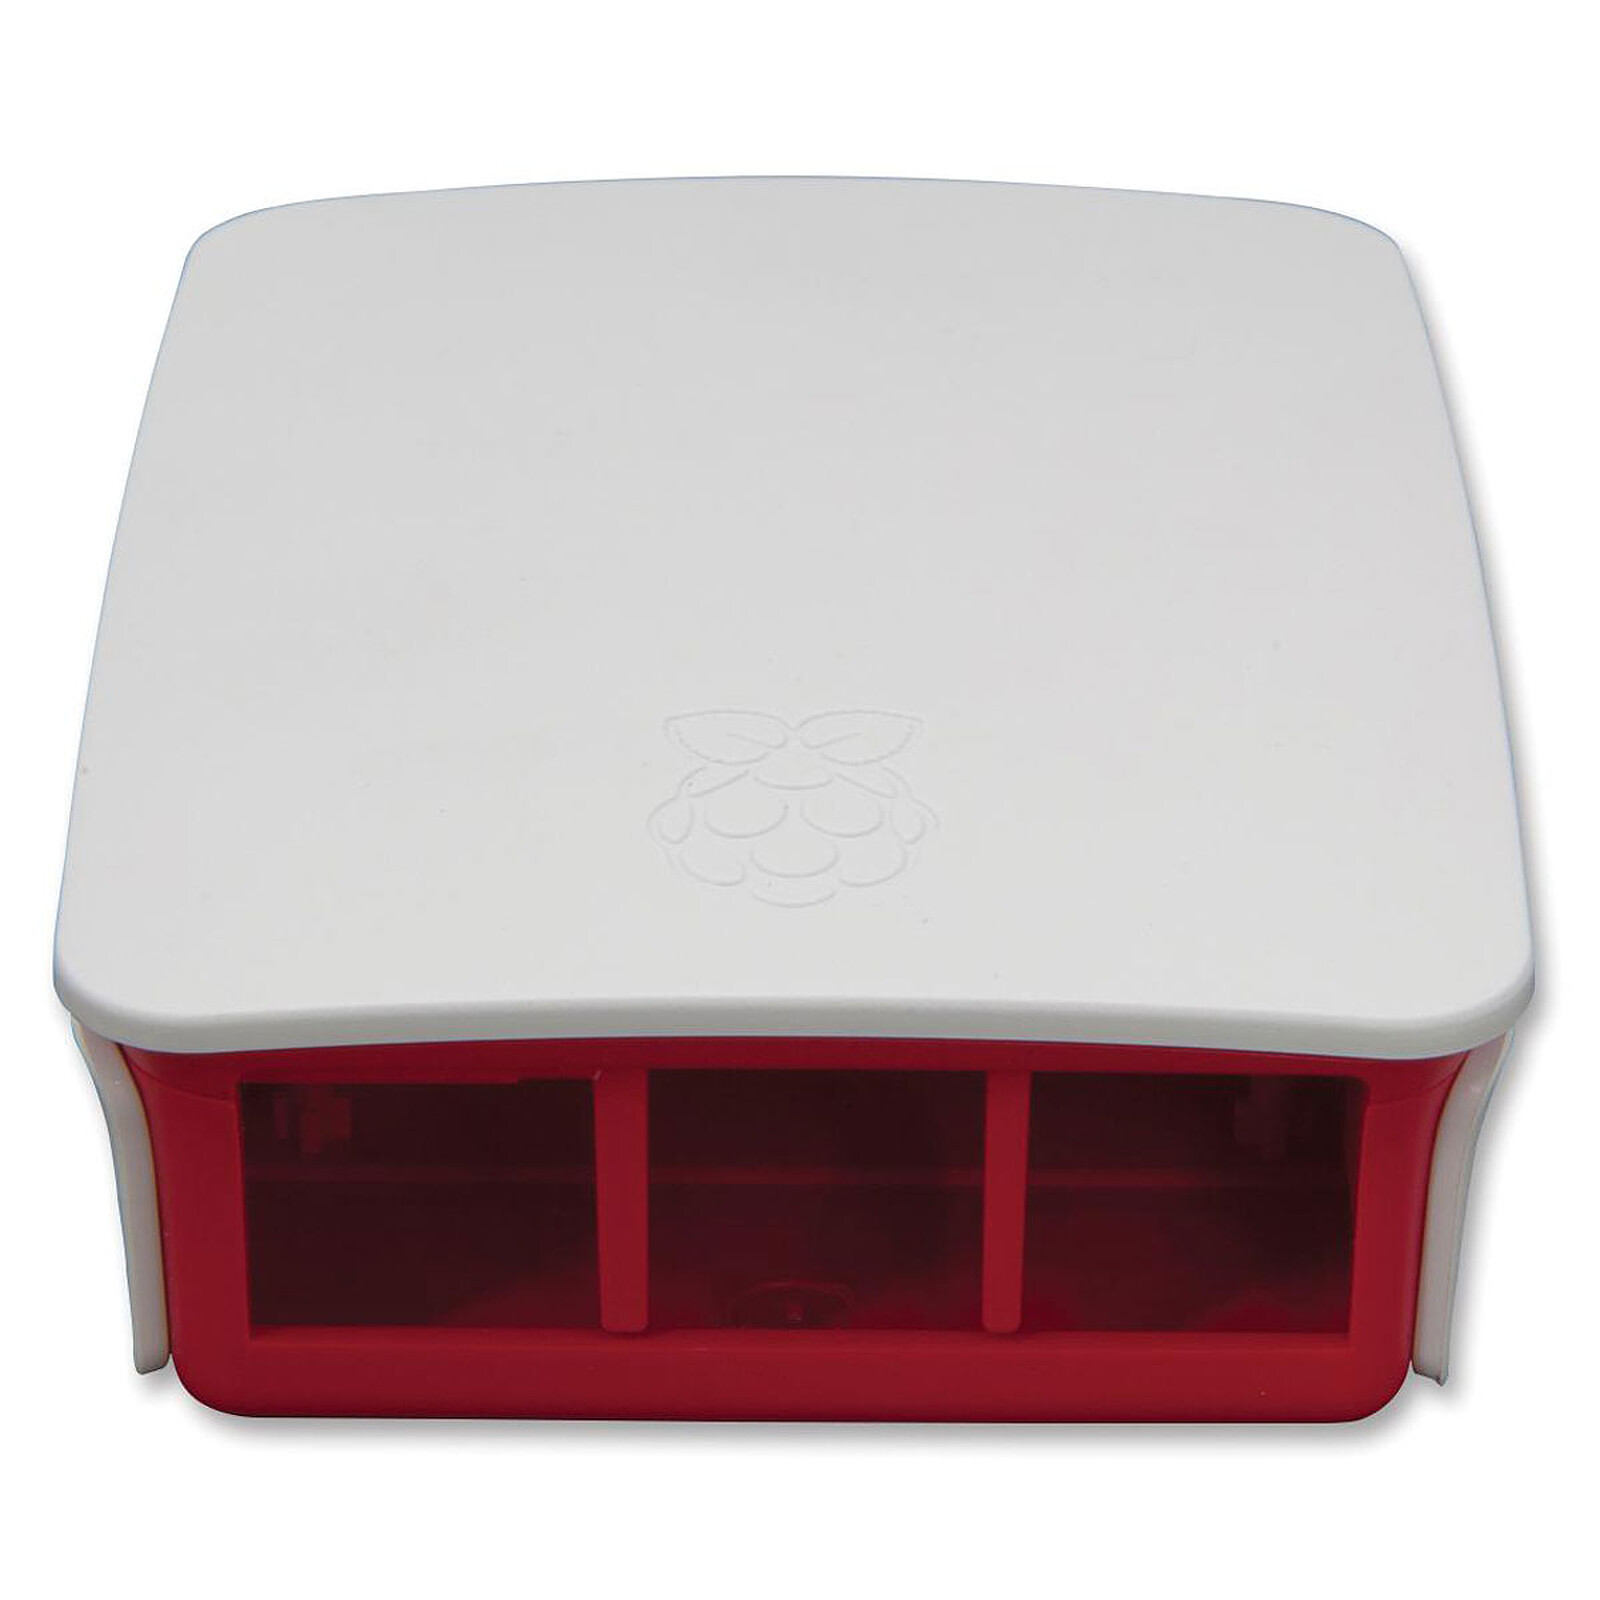 Raspberry Pi 5 Case Blanc/Rouge - Boîtier Raspberry Pi - Garantie 3 ans LDLC